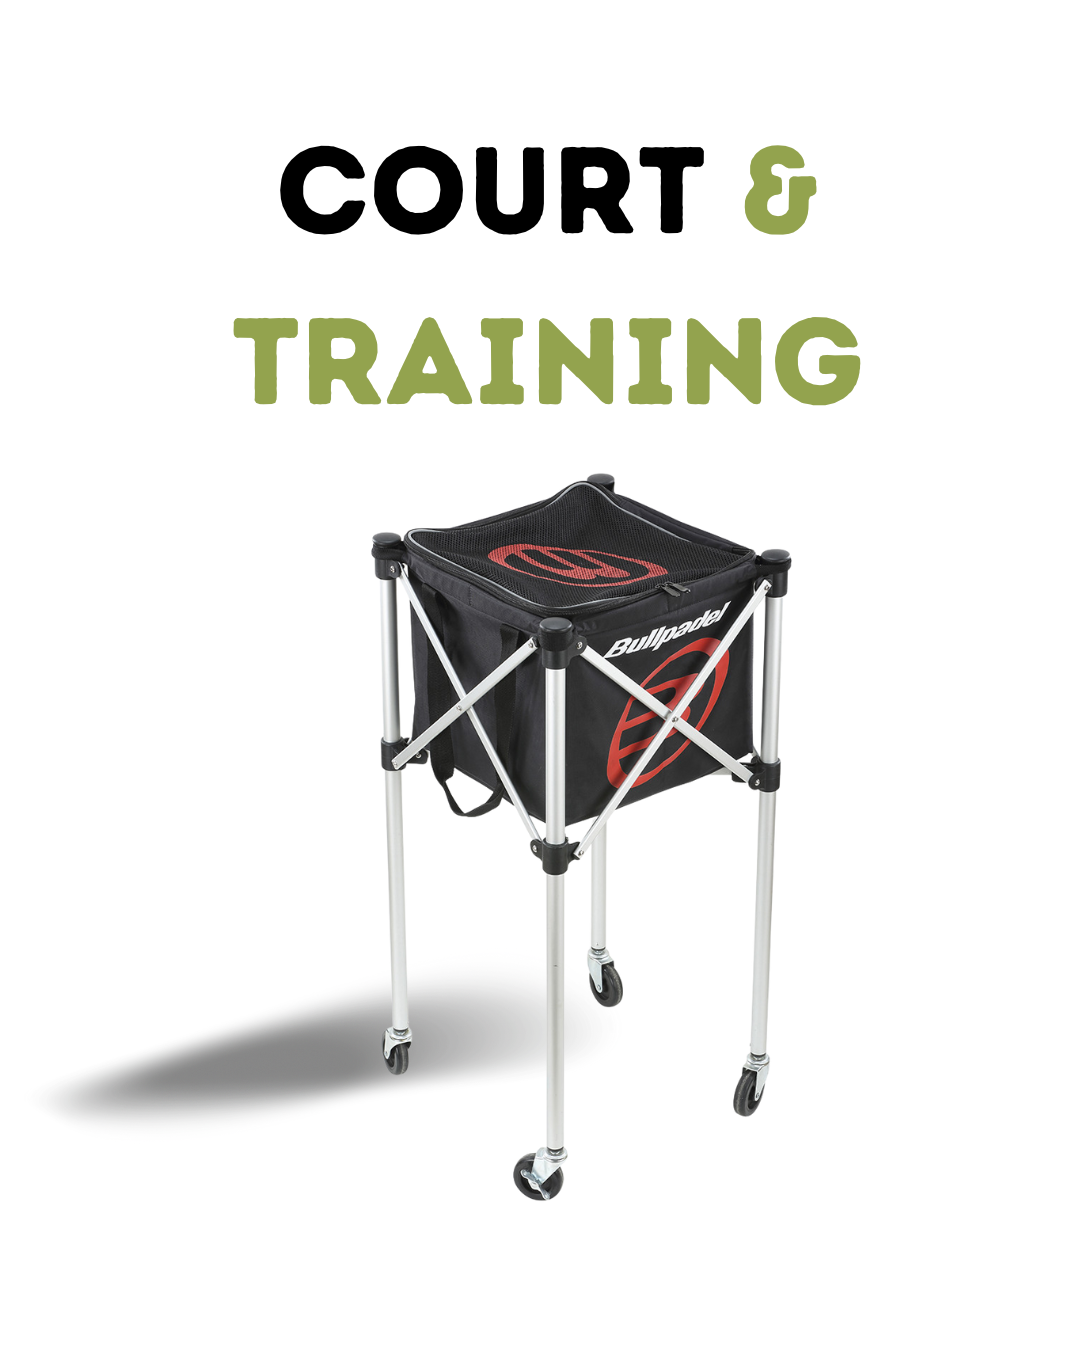 Court & Training